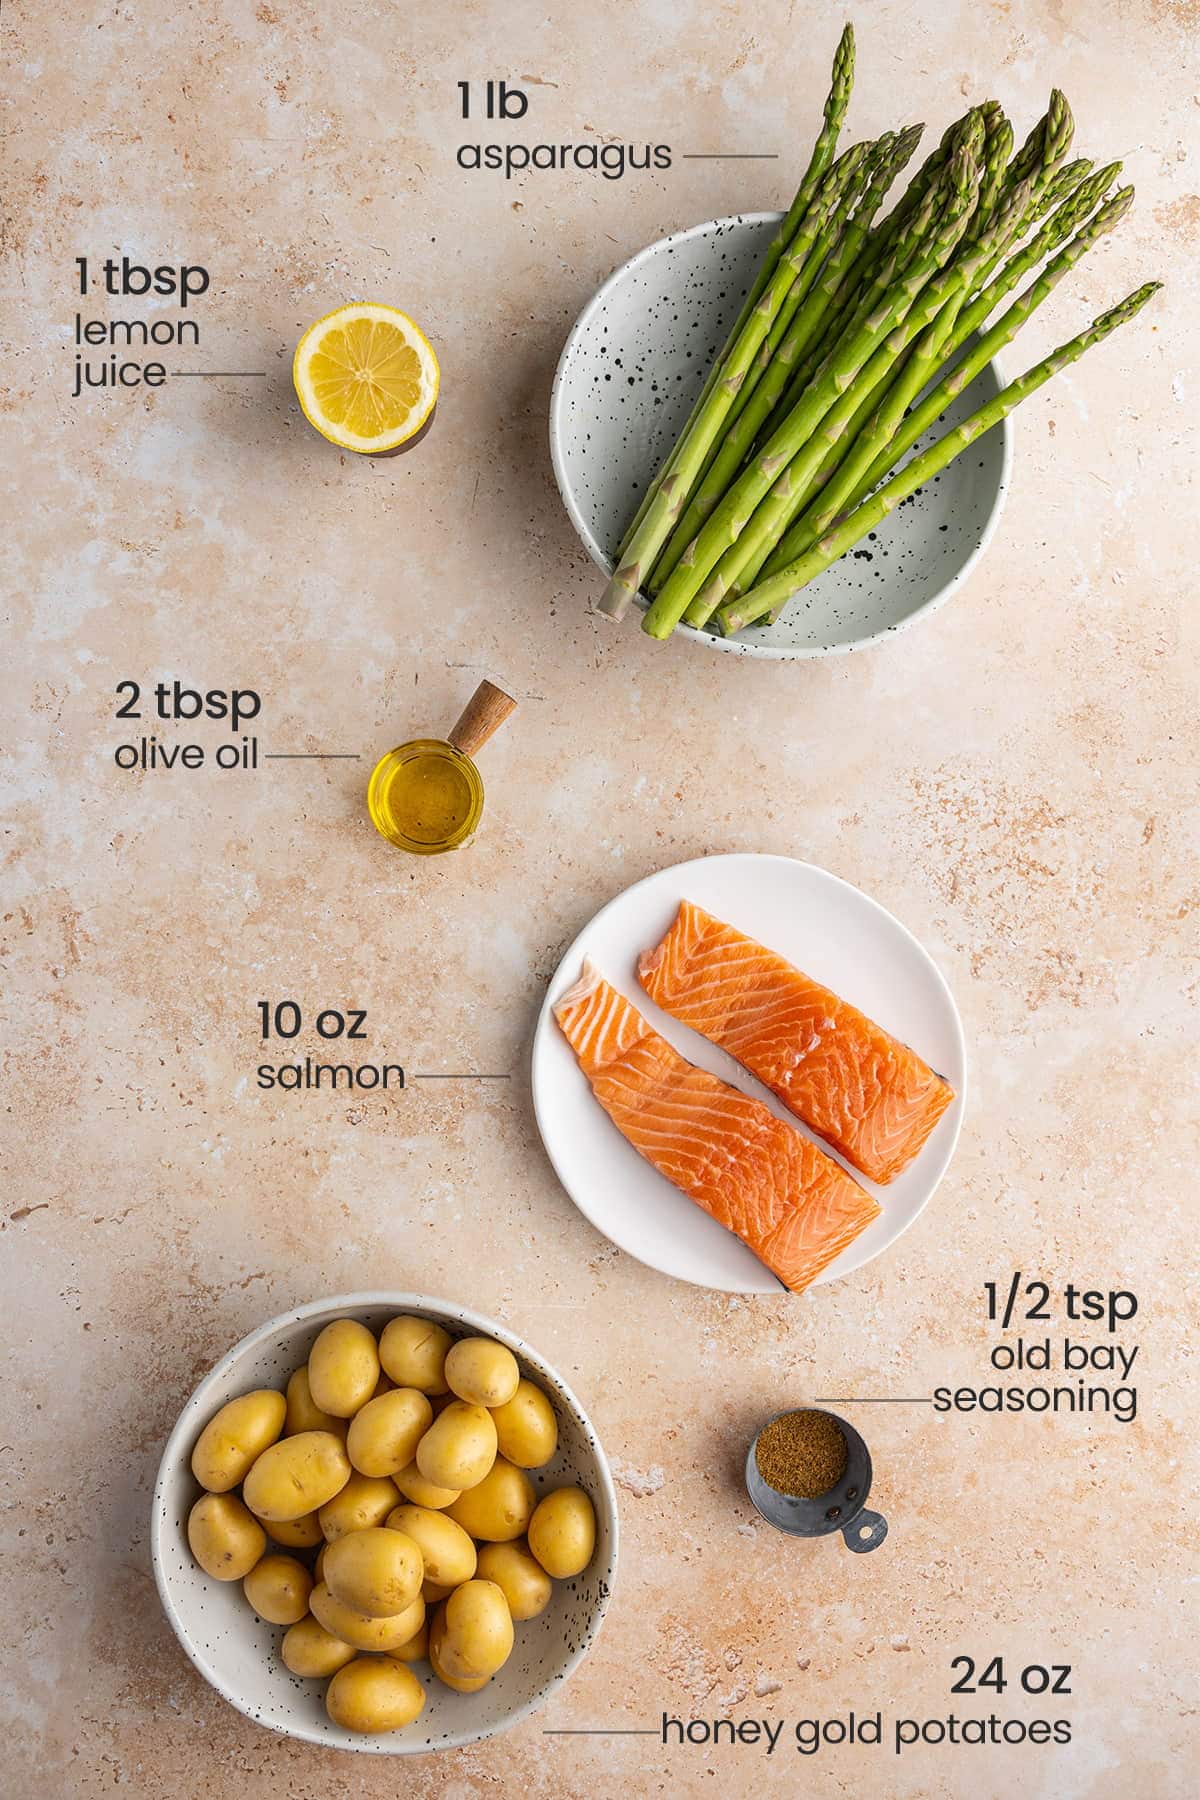 all ingredients for sheet pan salmon, asparagus and potatoes - lemon juice, asparagus, olive oil, salmon, old bay seasoning, honey gold potatoes